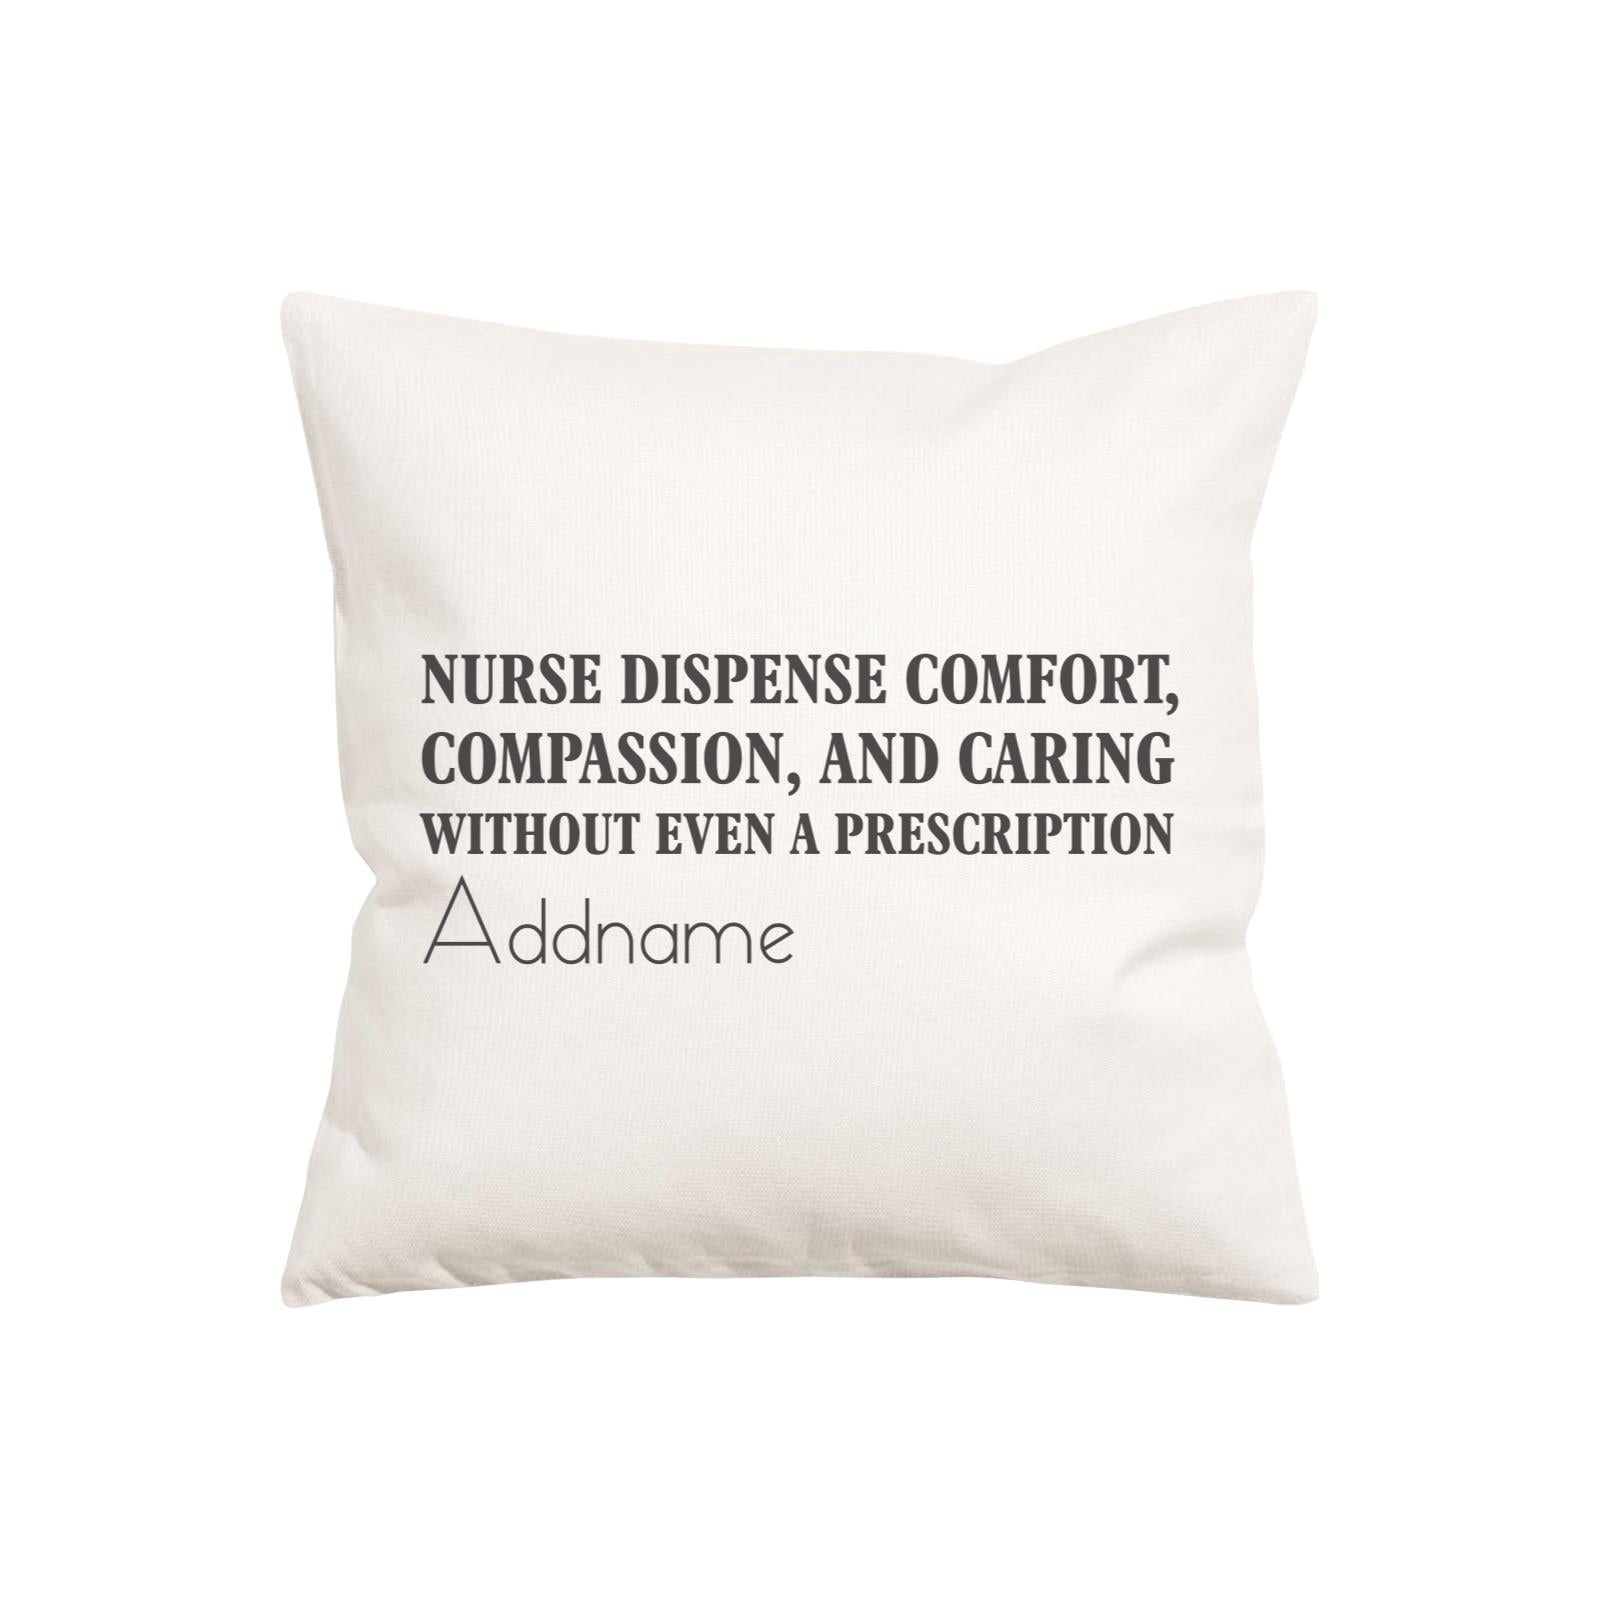 Nurse Dispense Comfort, Compassion, And Caring Without Even A Prescription Pillow Cushion